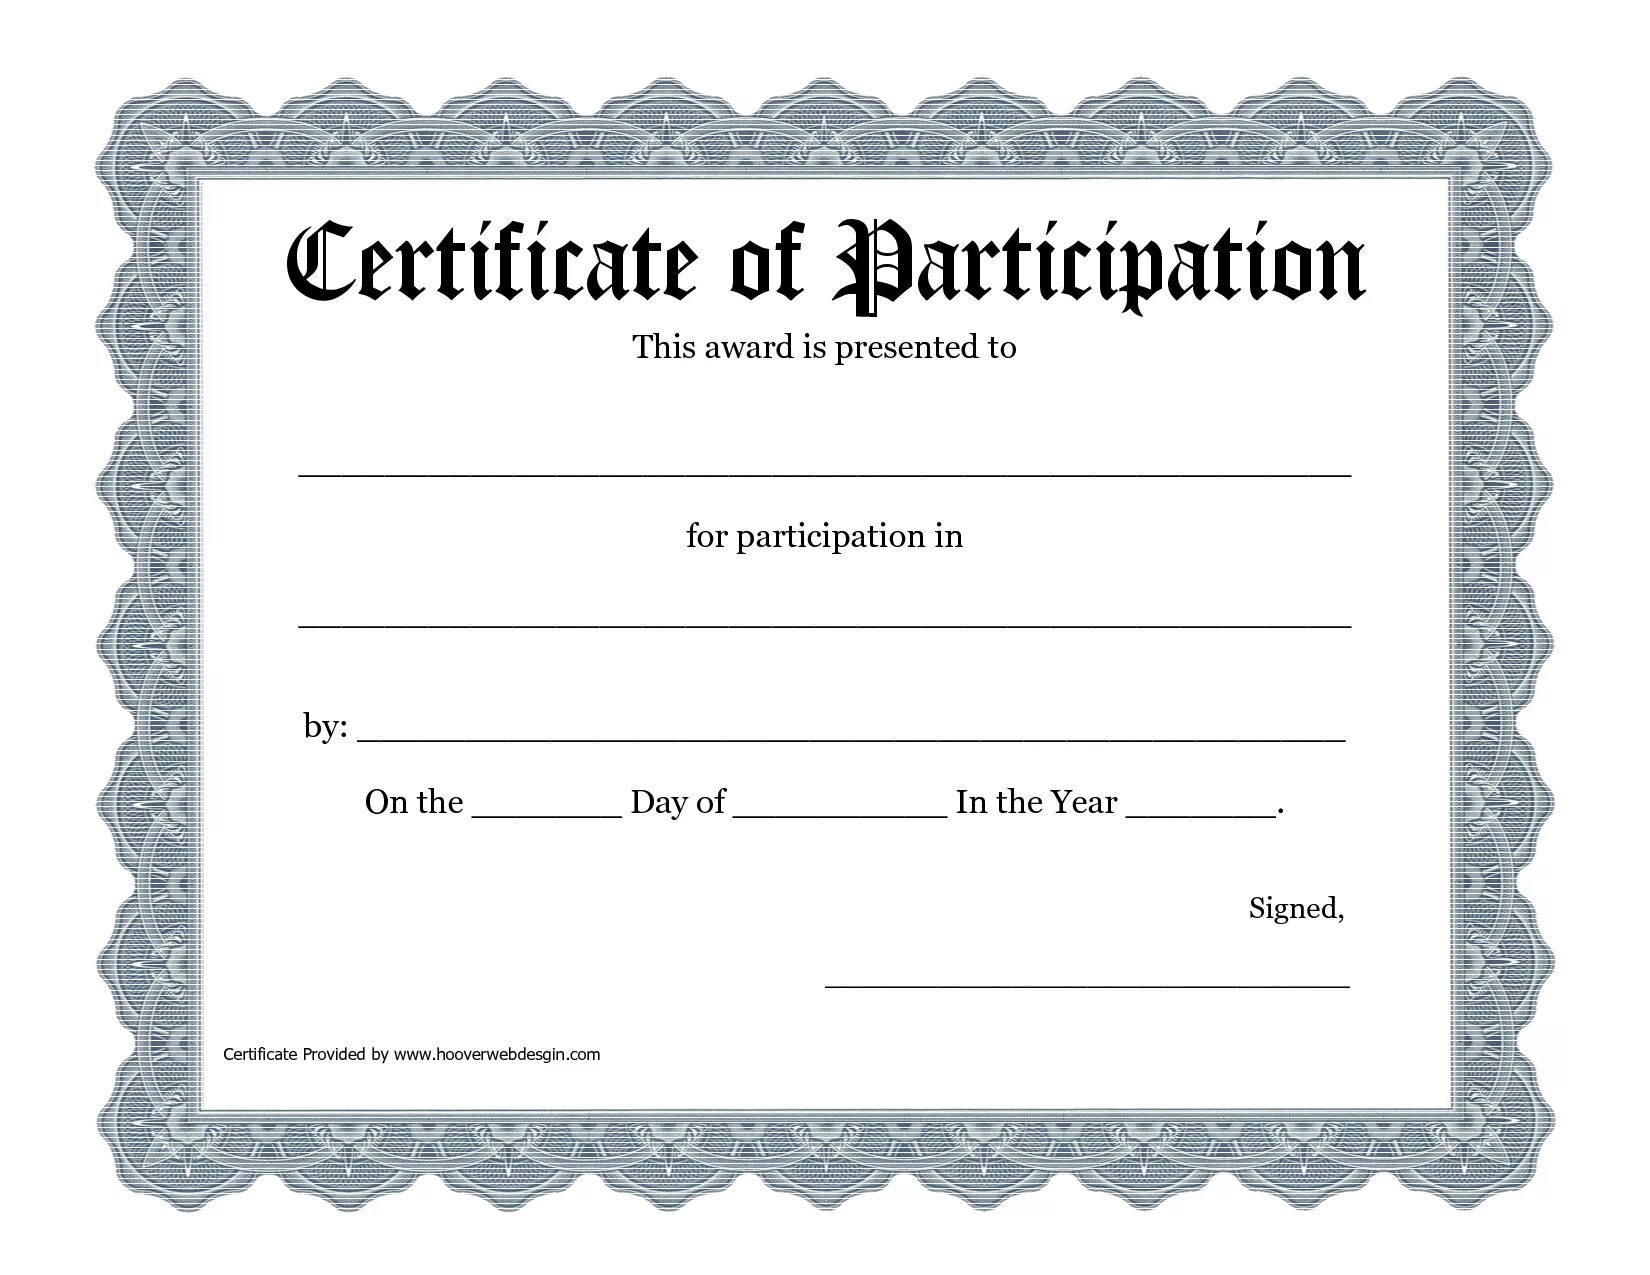 Certificate of Appreciation. Сертификат шаблон. Сертификат макет. Certificate of participation. Url certificate